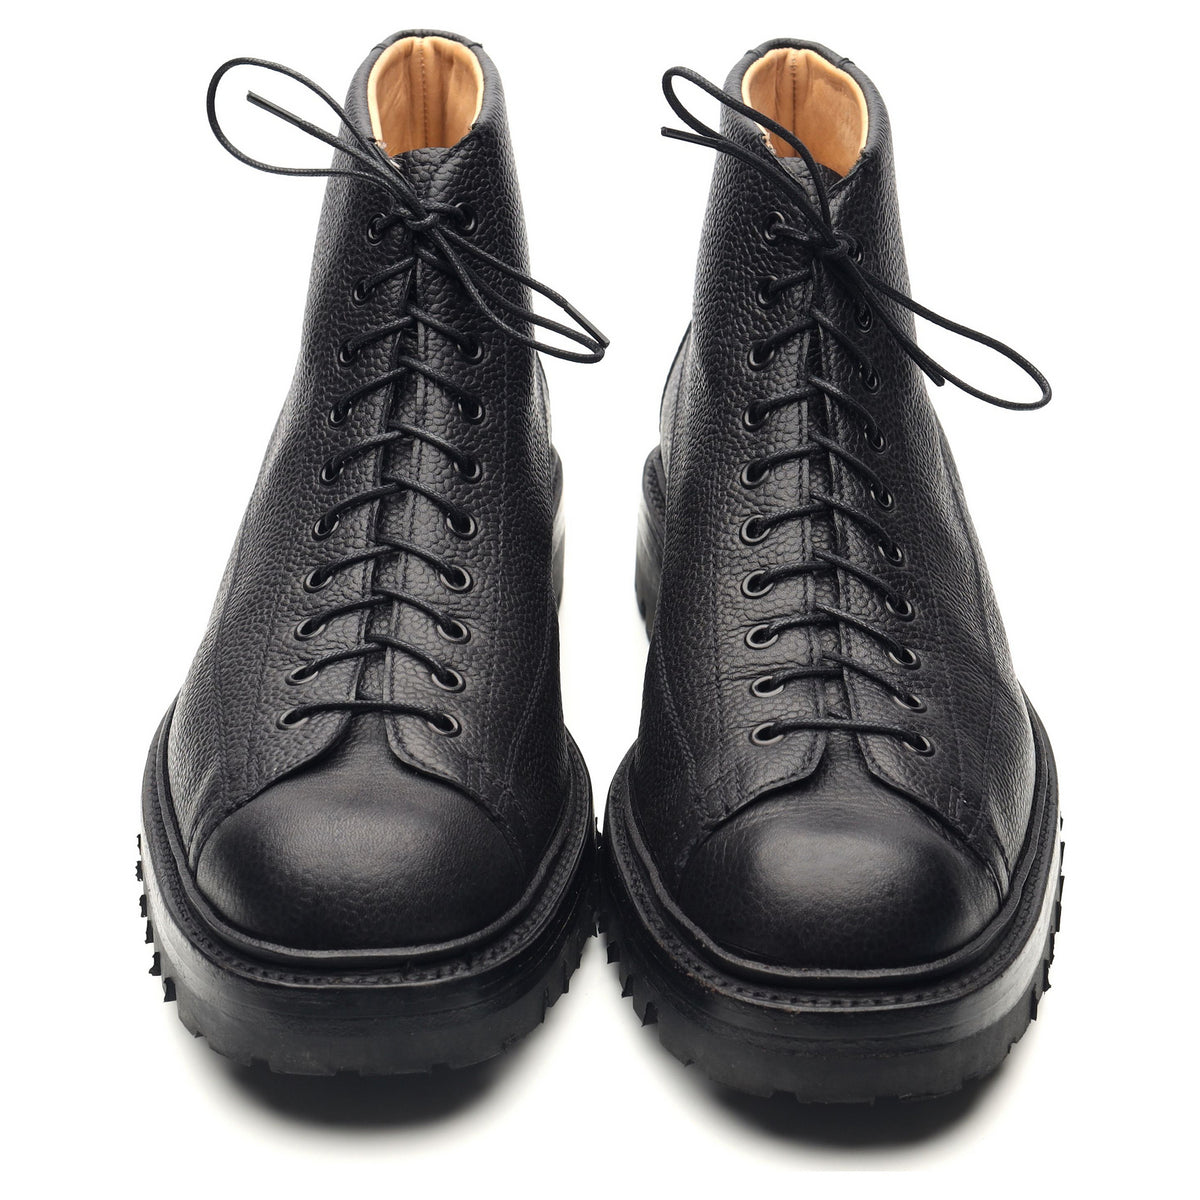 Lou Dalton Black Leather Boots UK 10.5 F